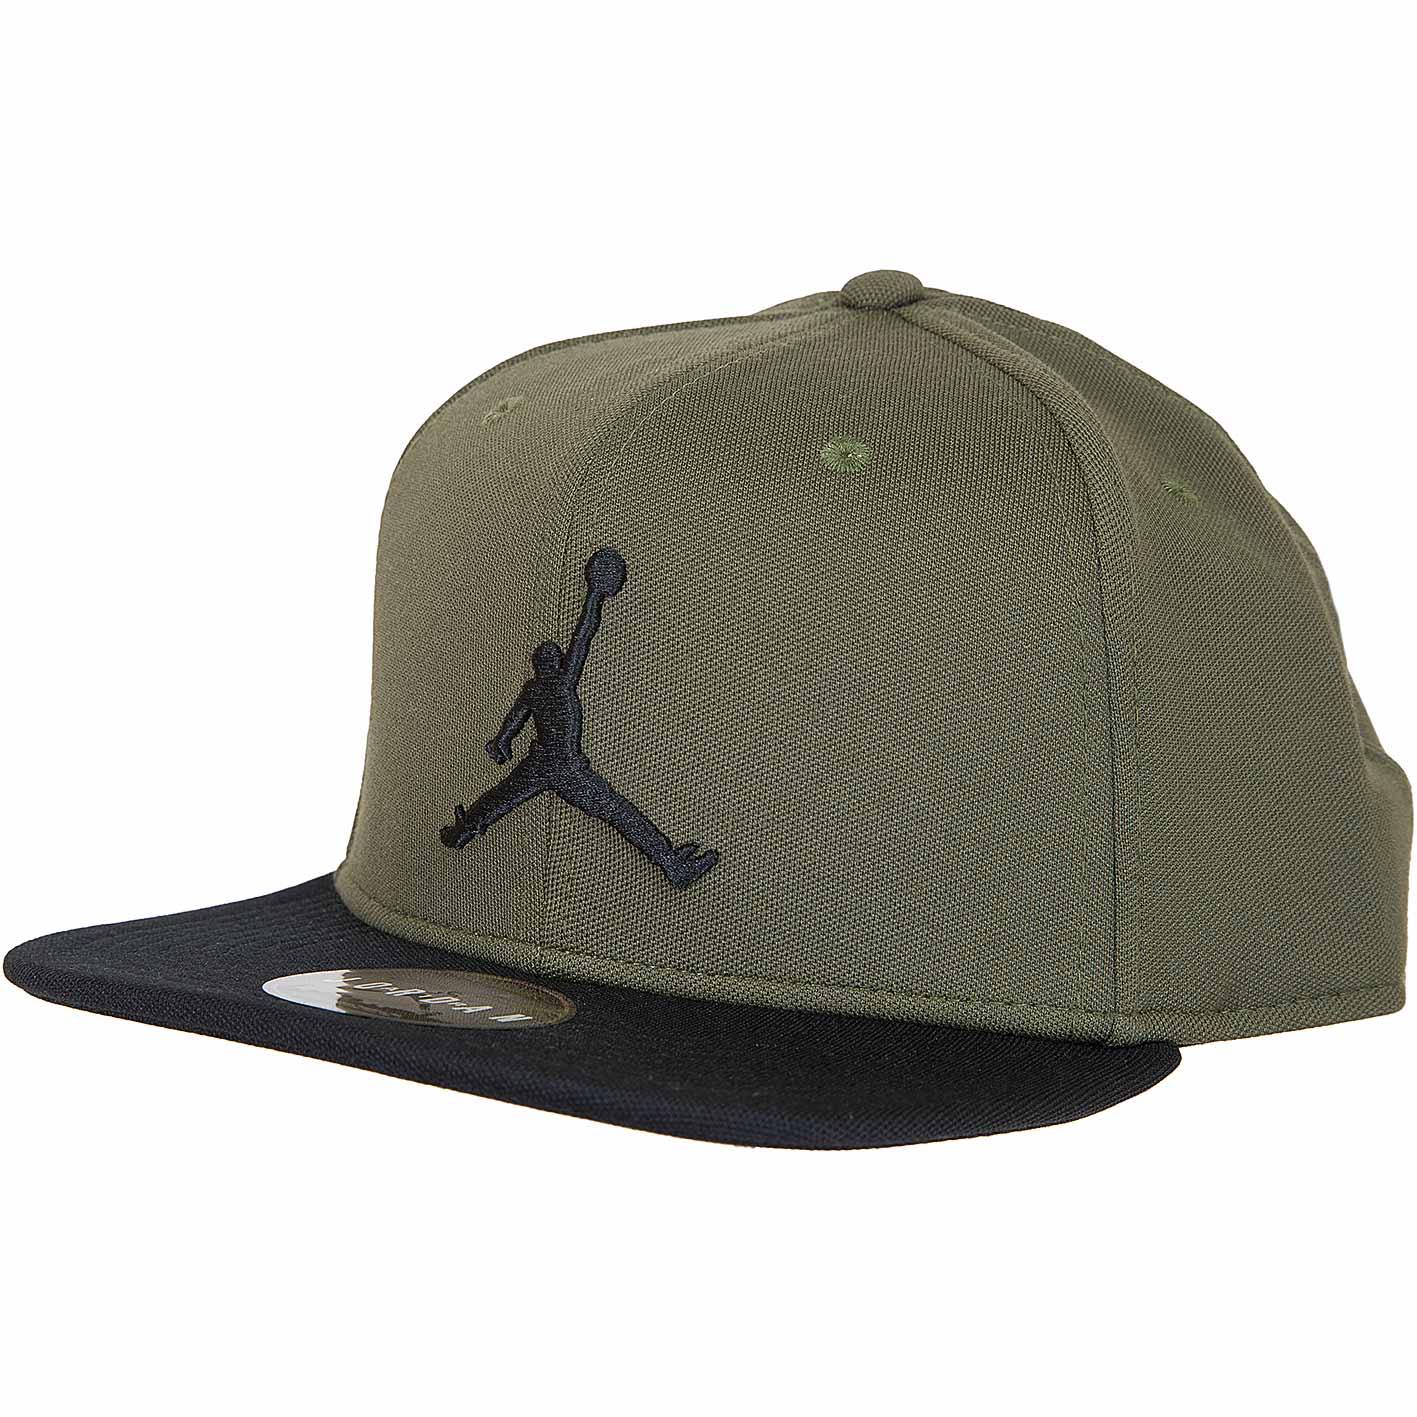 ☆ Nike Snapback Cap Jordan Jumpman oliv/schwarz - hier bestellen!